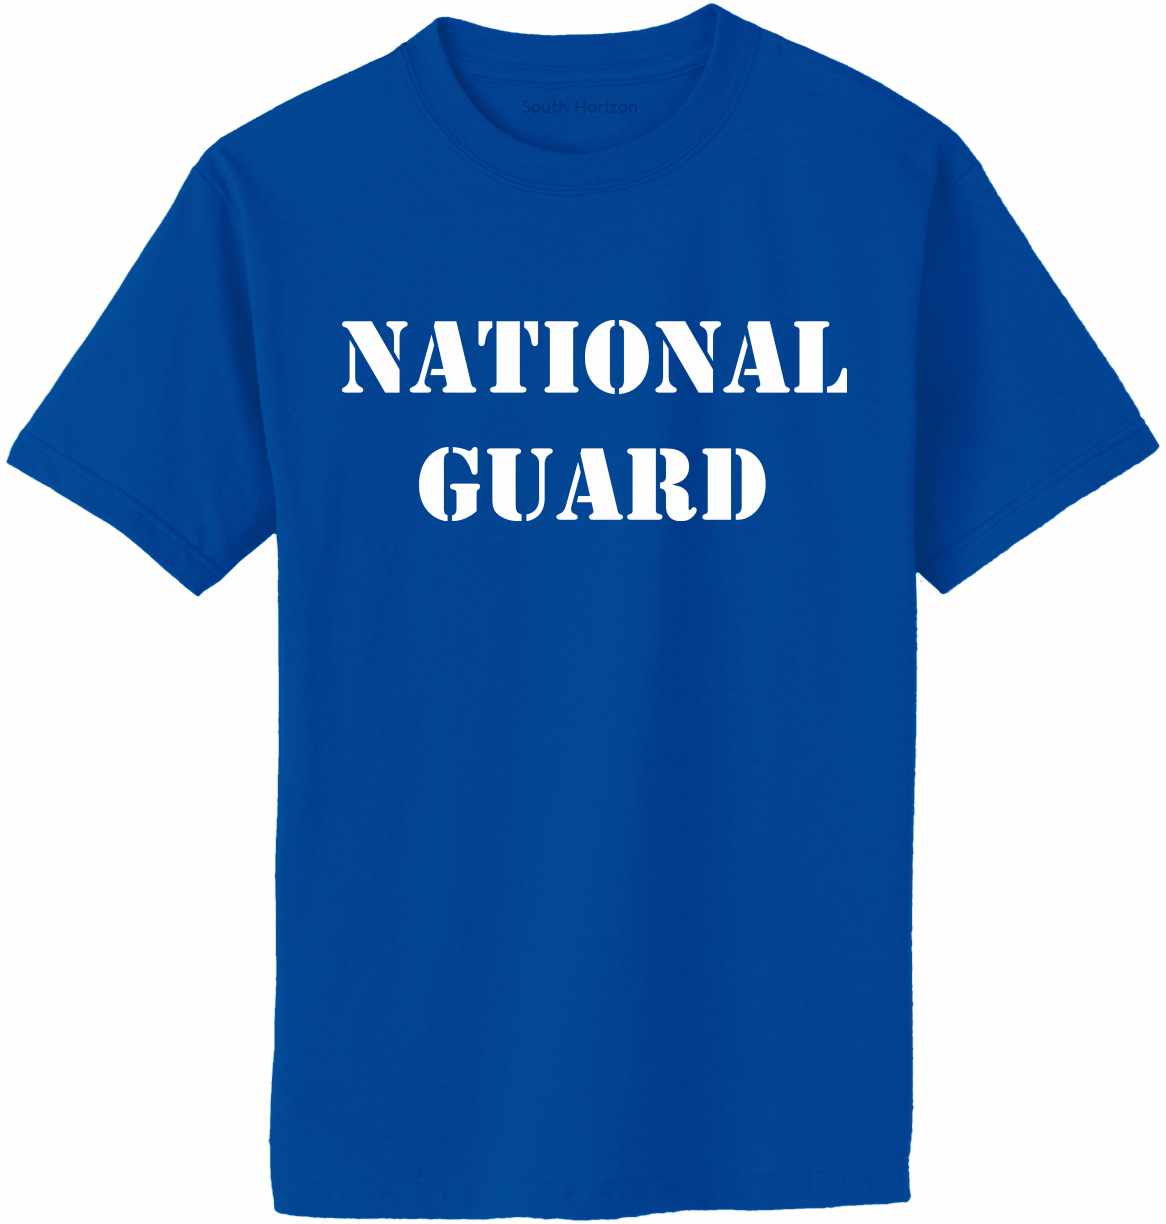 NATIONAL GUARD Adult T-Shirt (#347-1)